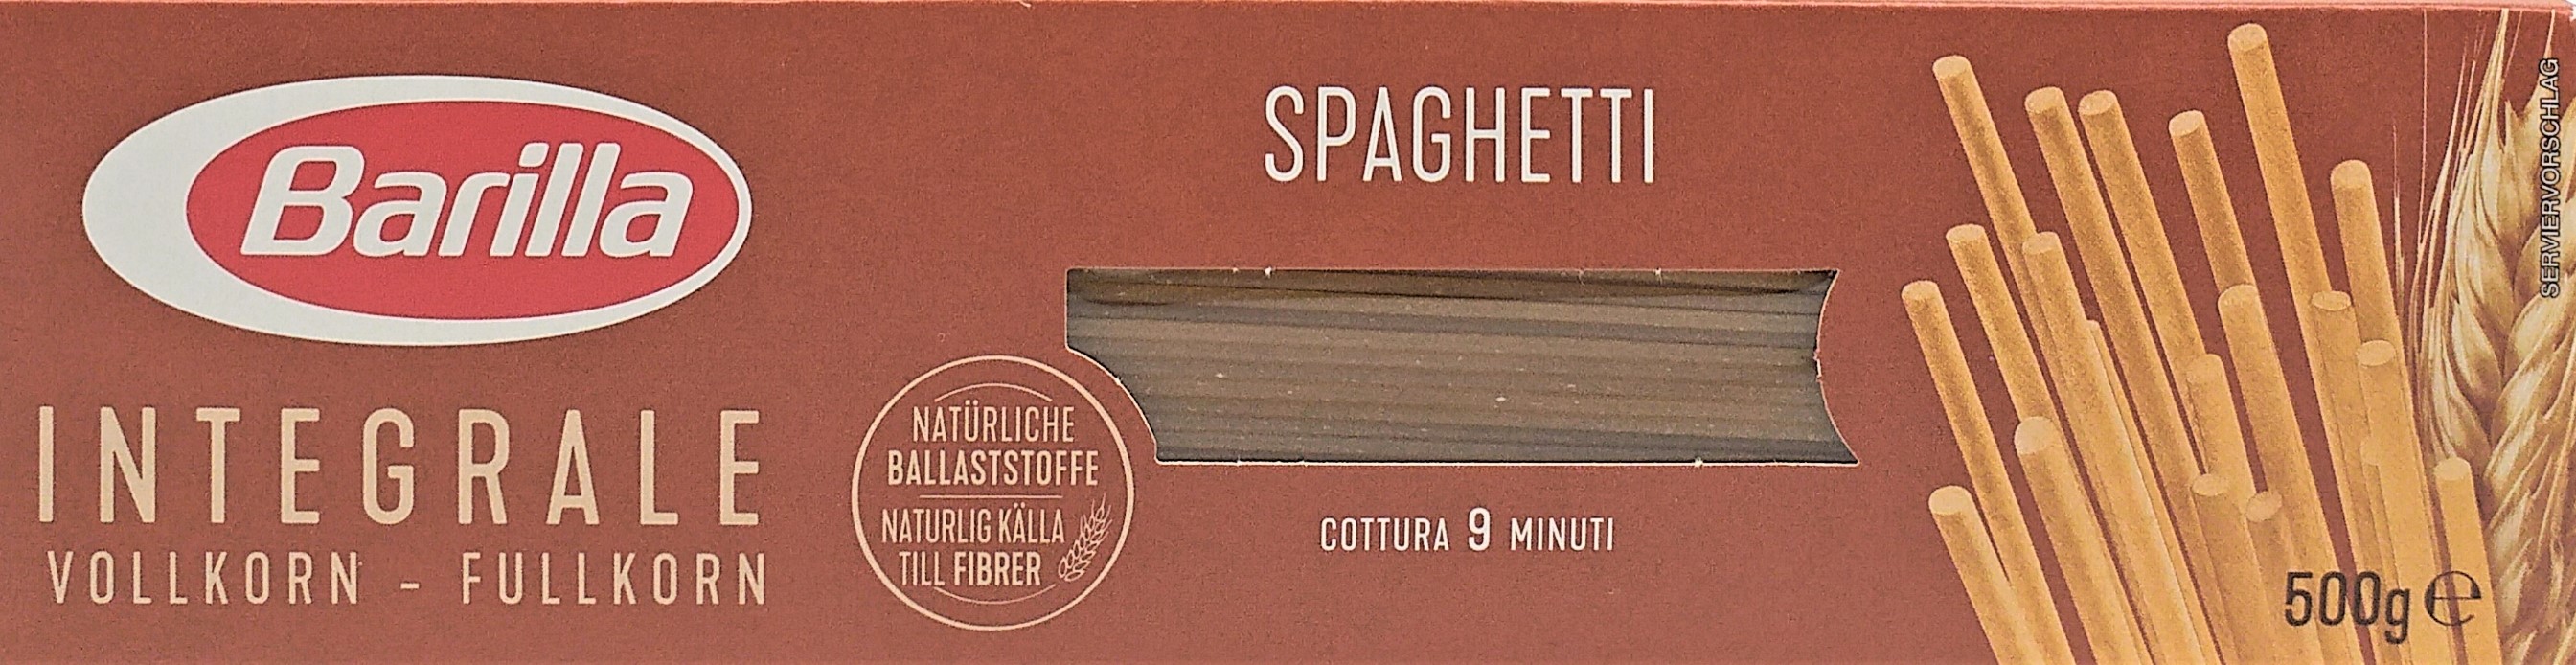 Barilla Spaghetti Integrale Vollkorn 500g